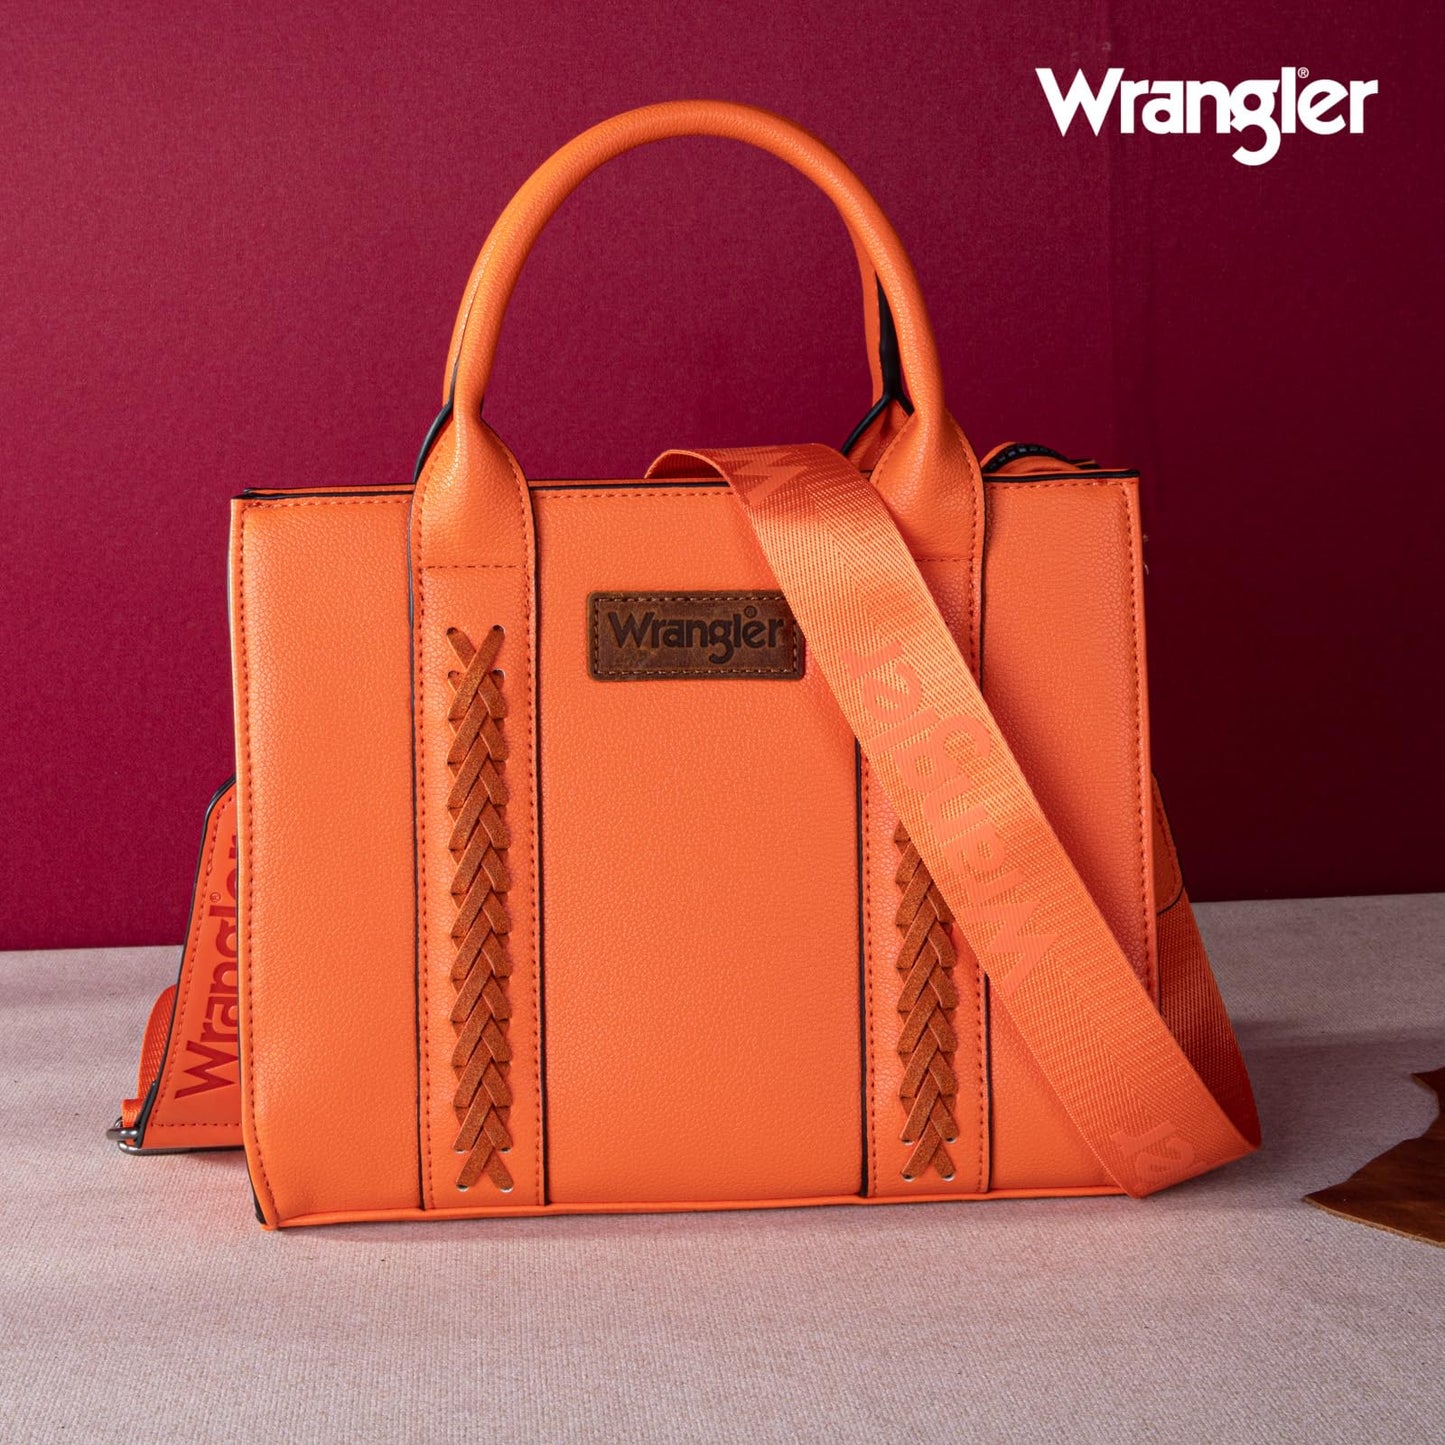 Wrangler Top Handle Handbags Tote Bag for Women Satchel Bag Shoulder Bag Purse for Women with Crossbody Strap LG-WG70-8120DOR